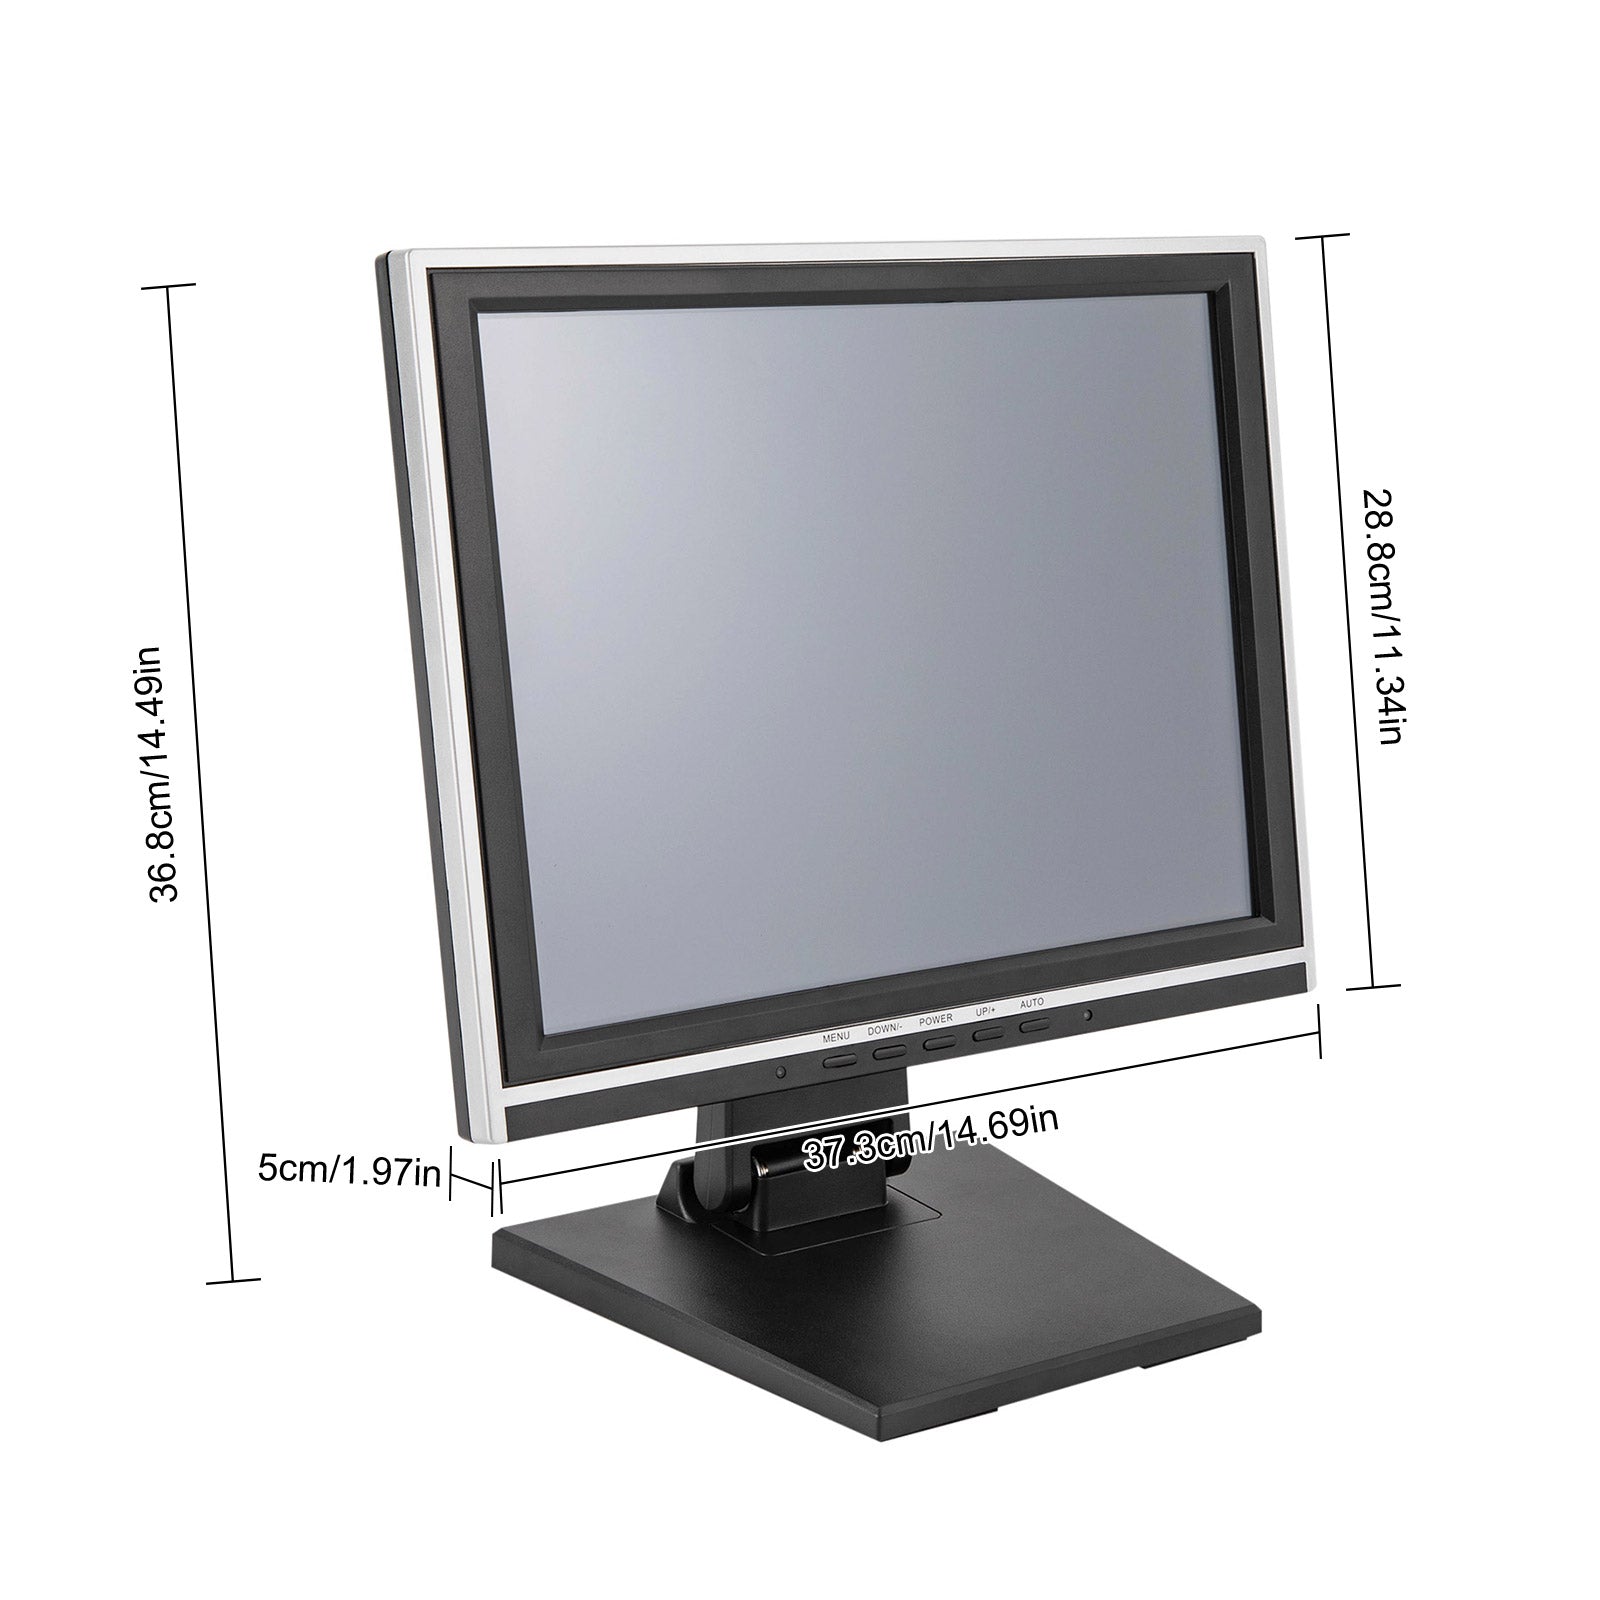 Schermo LCD touchscreen HD 15" 1024 x 768 VGA USB POS